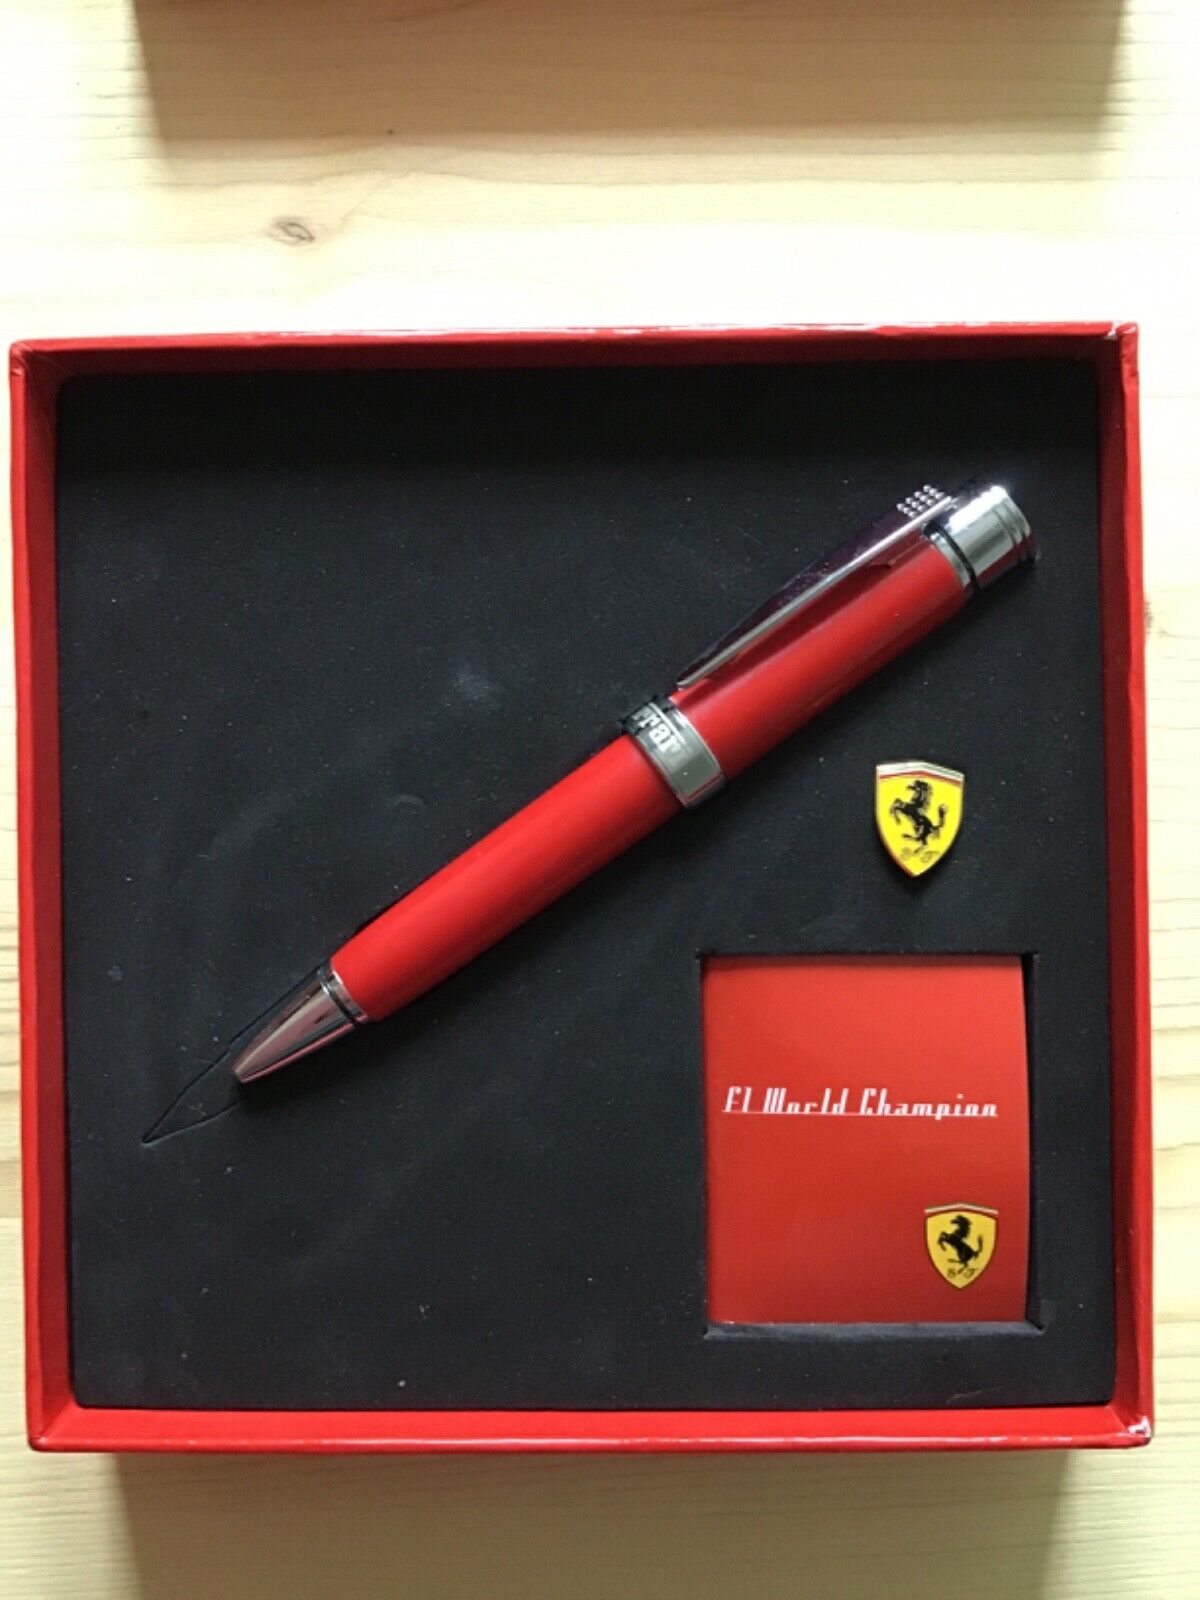 Vintage Ferrari Ballpoint Pen “rare” + extra Ferrari Emblem Lapel Pin by Artena